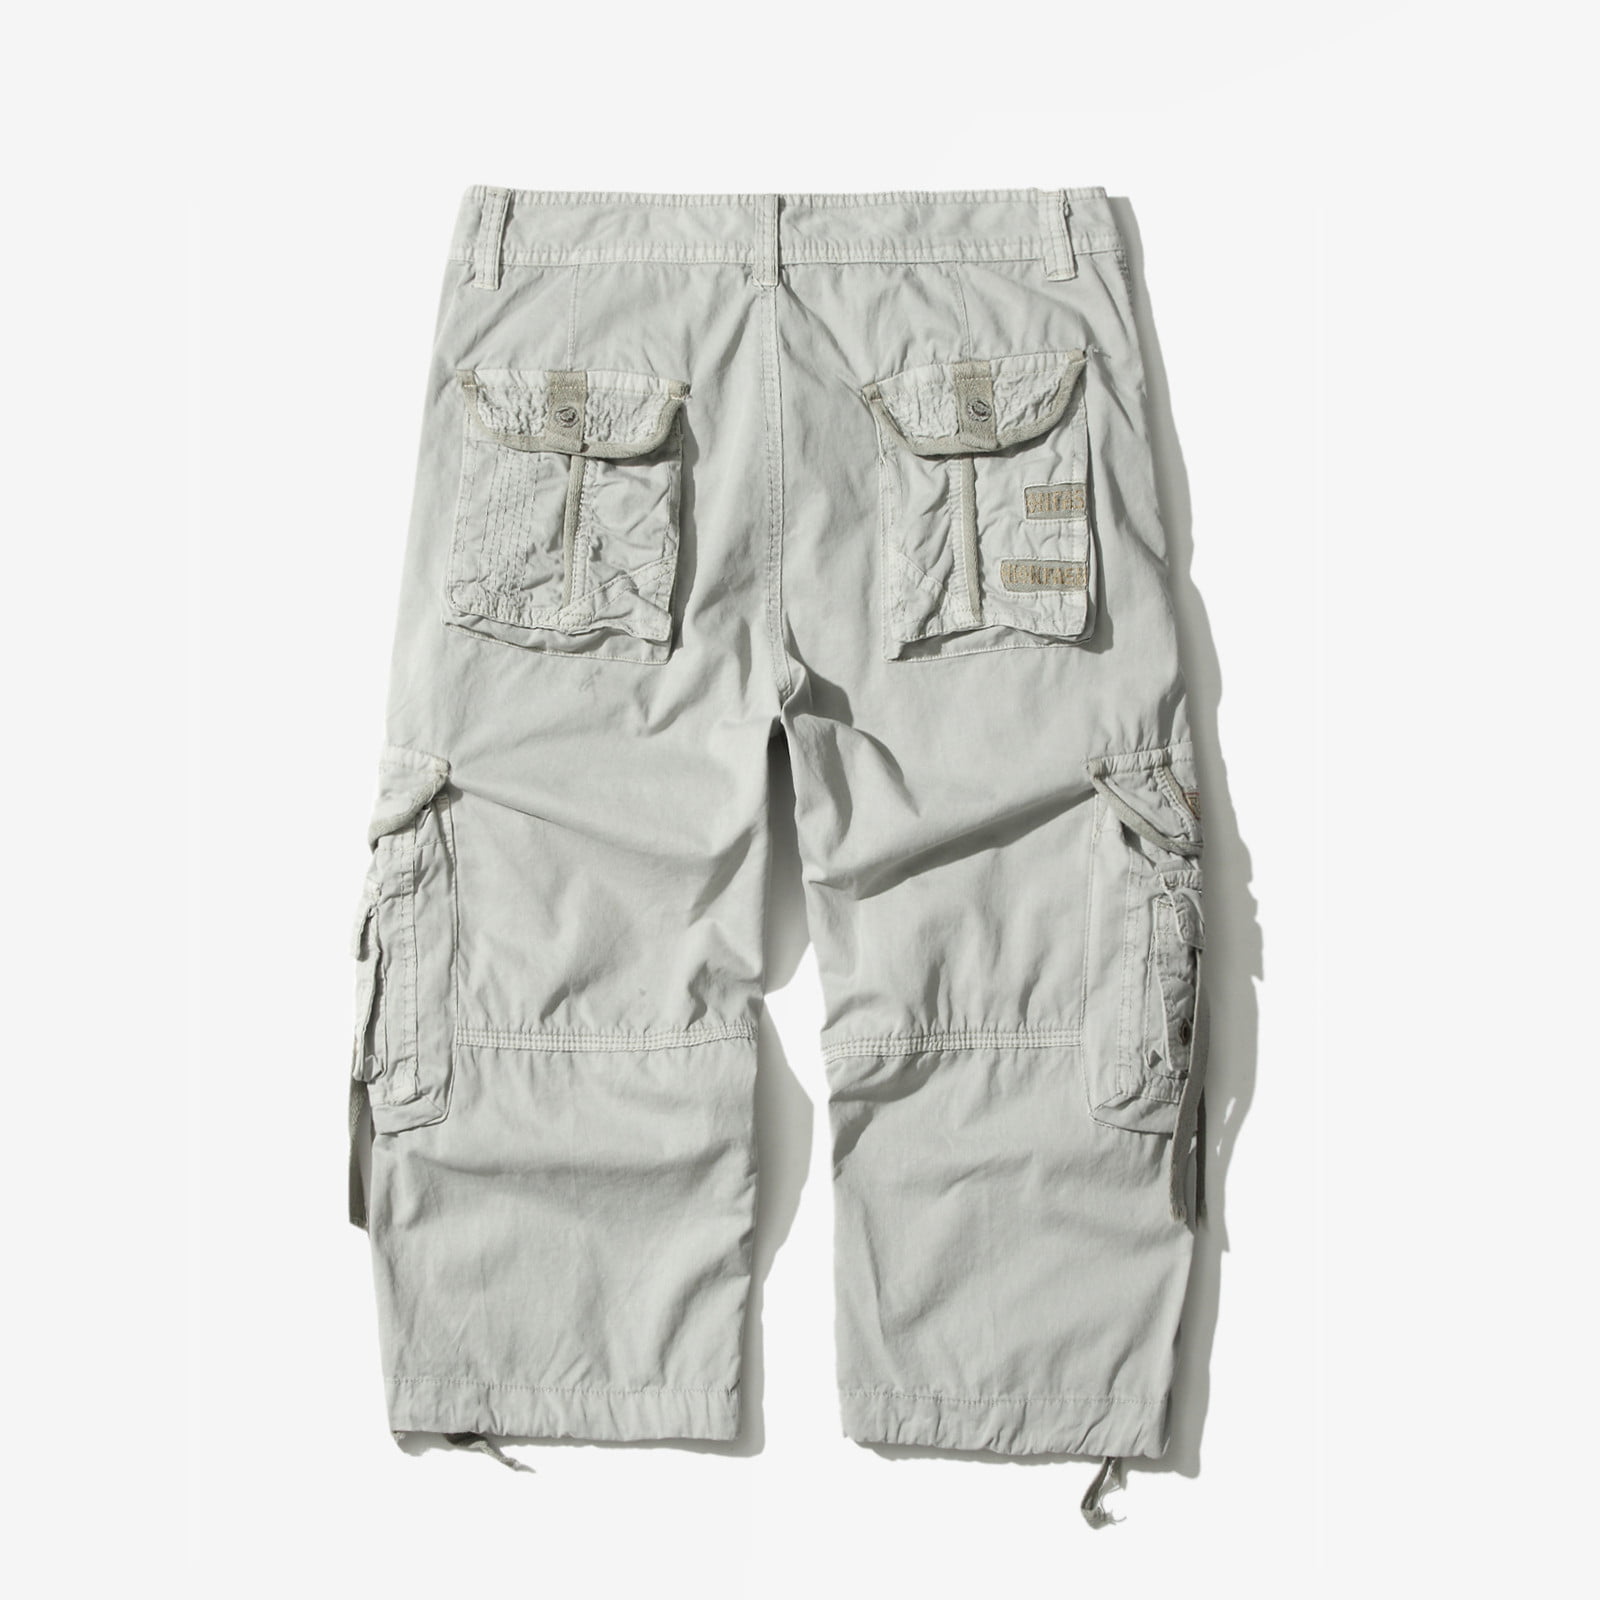 Penkiiy Mens Work Men\'s Beach Cargo Pocket Pure Color Shorts Shorts Pant Shorts Trouser Casual Gray Outdoors Cargo